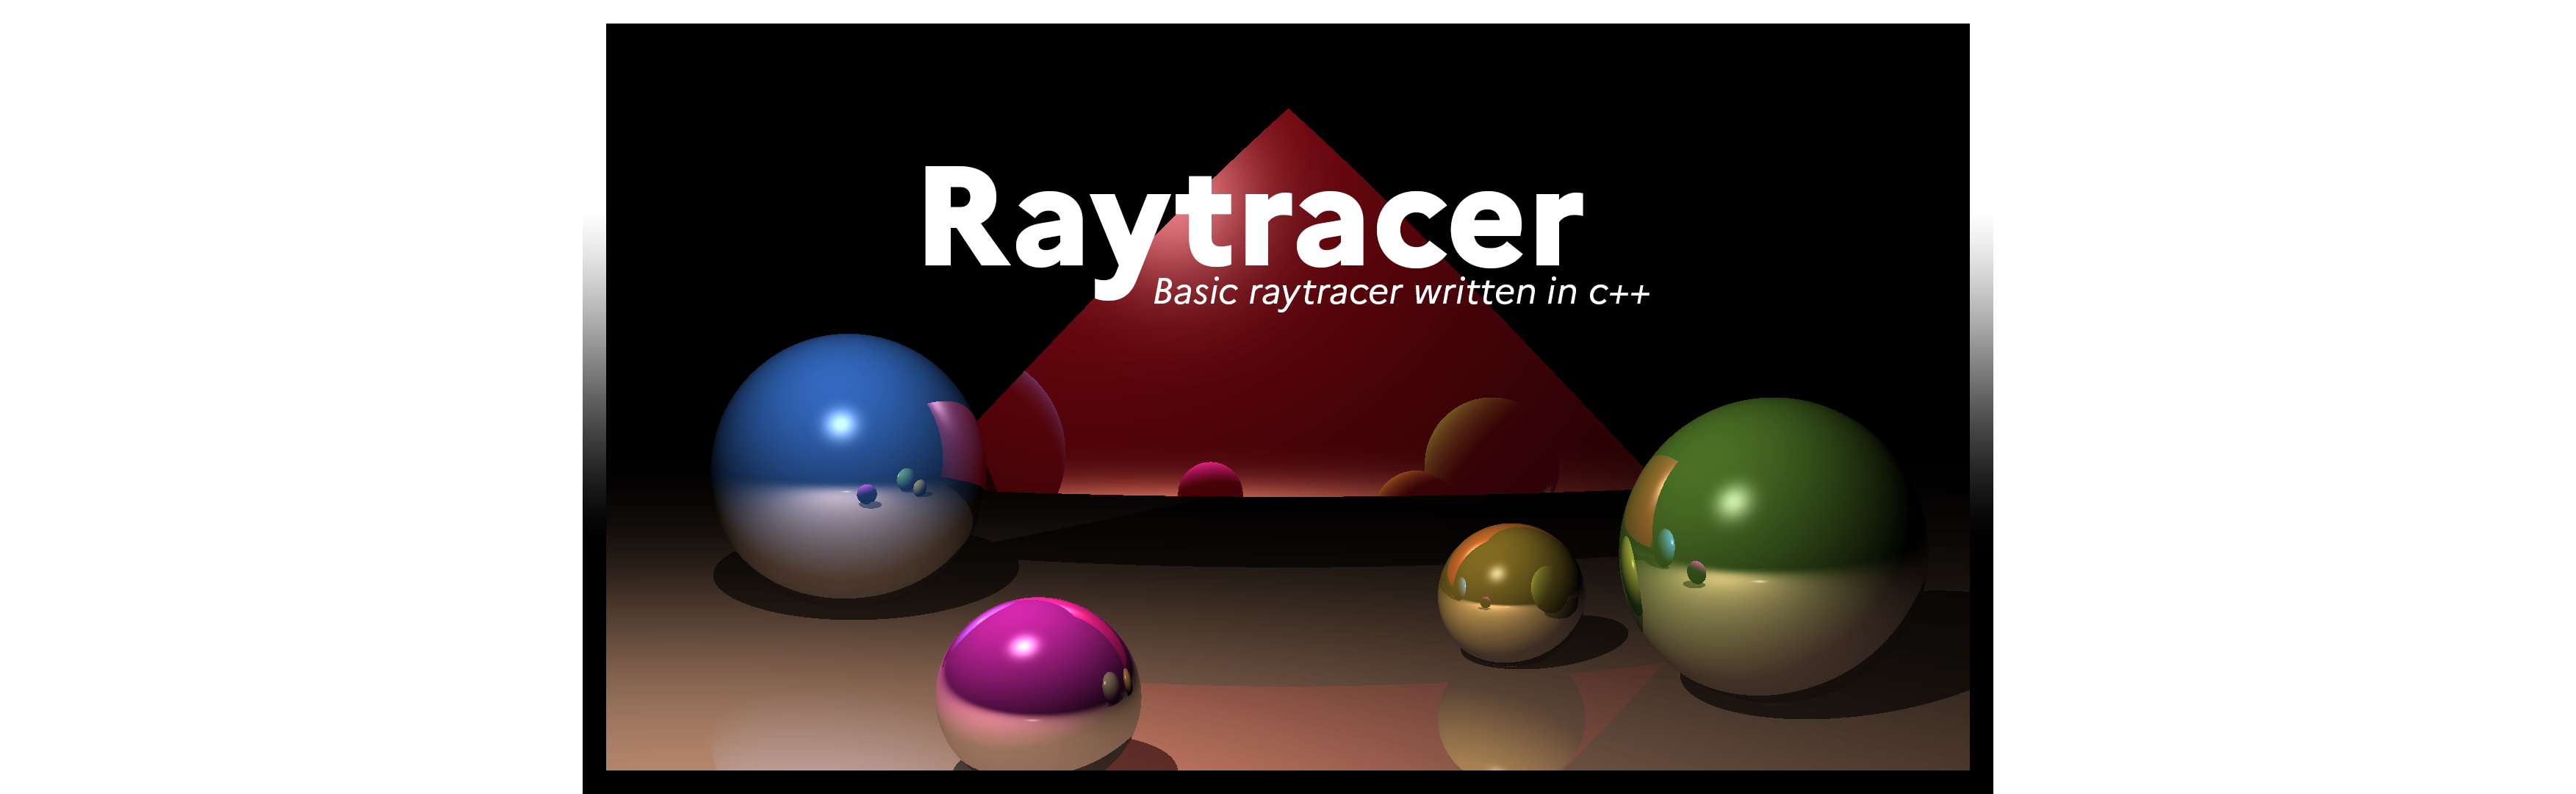 Raytracer banner